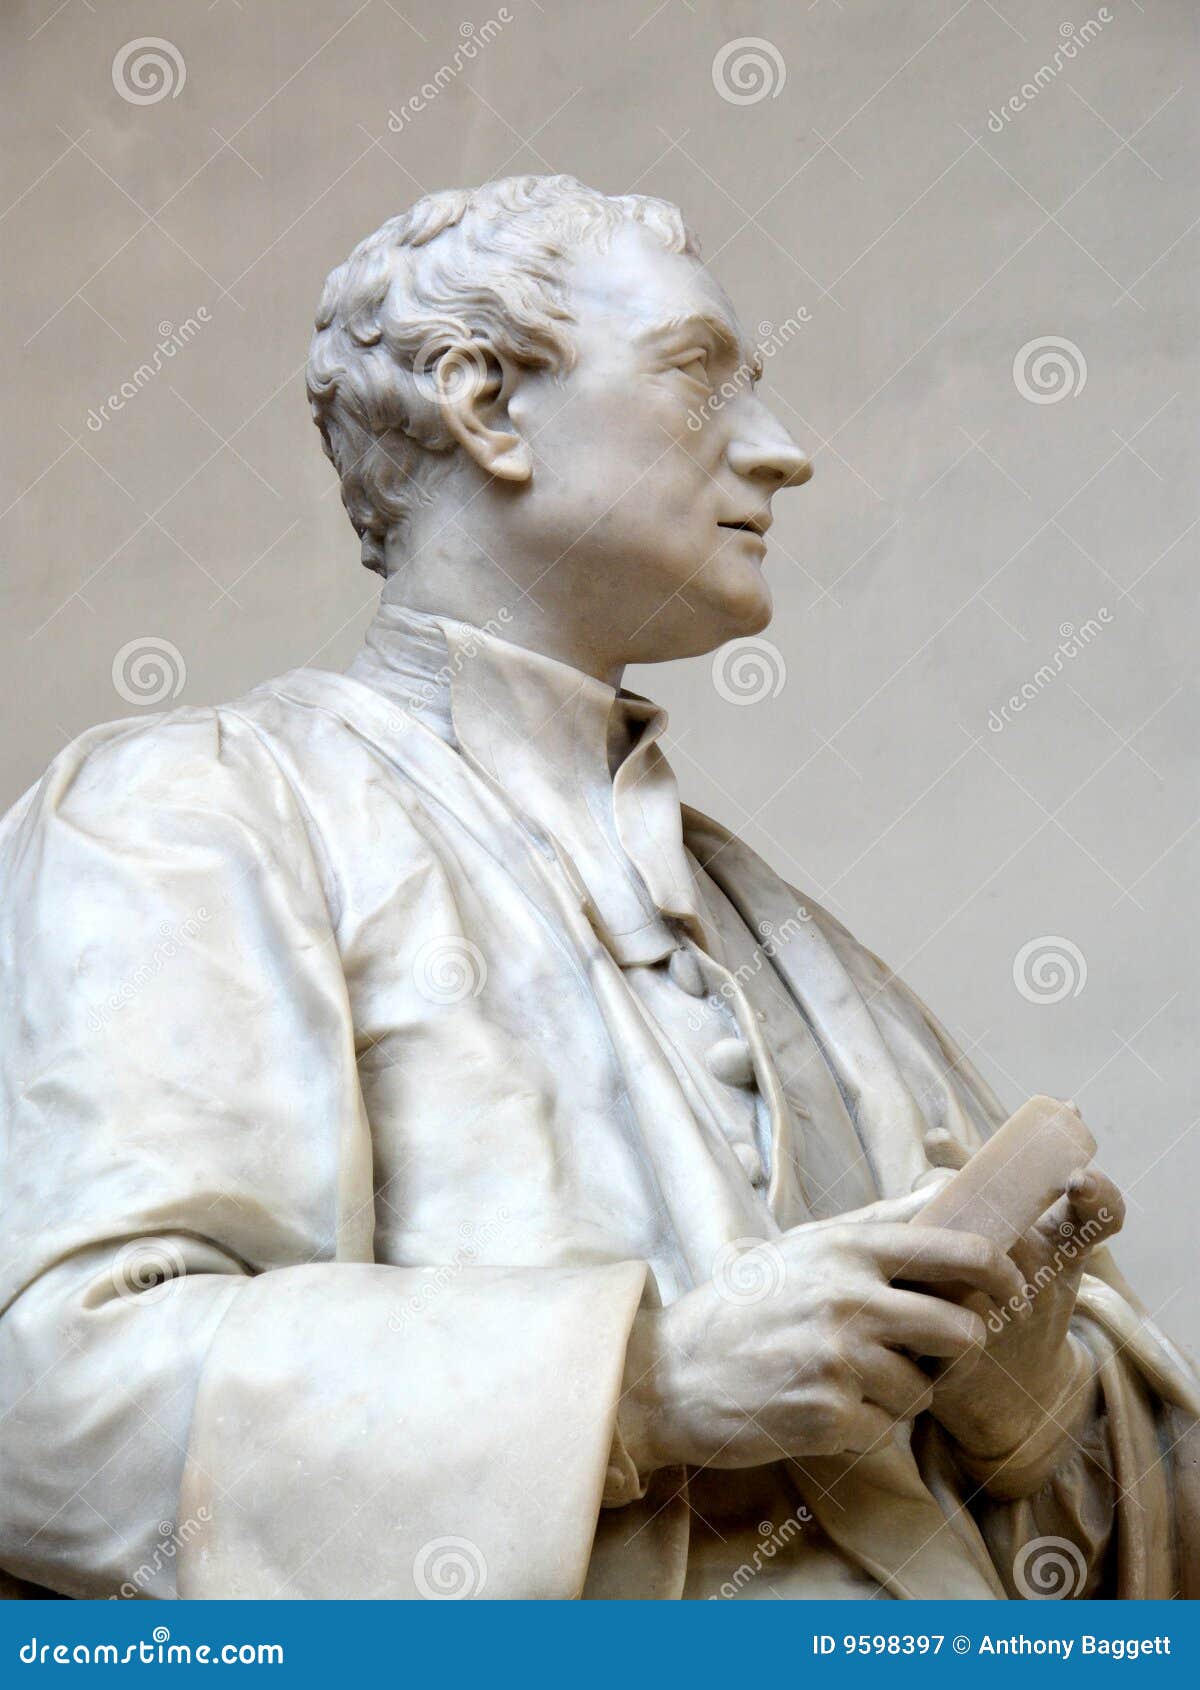 sir isaac newton statue